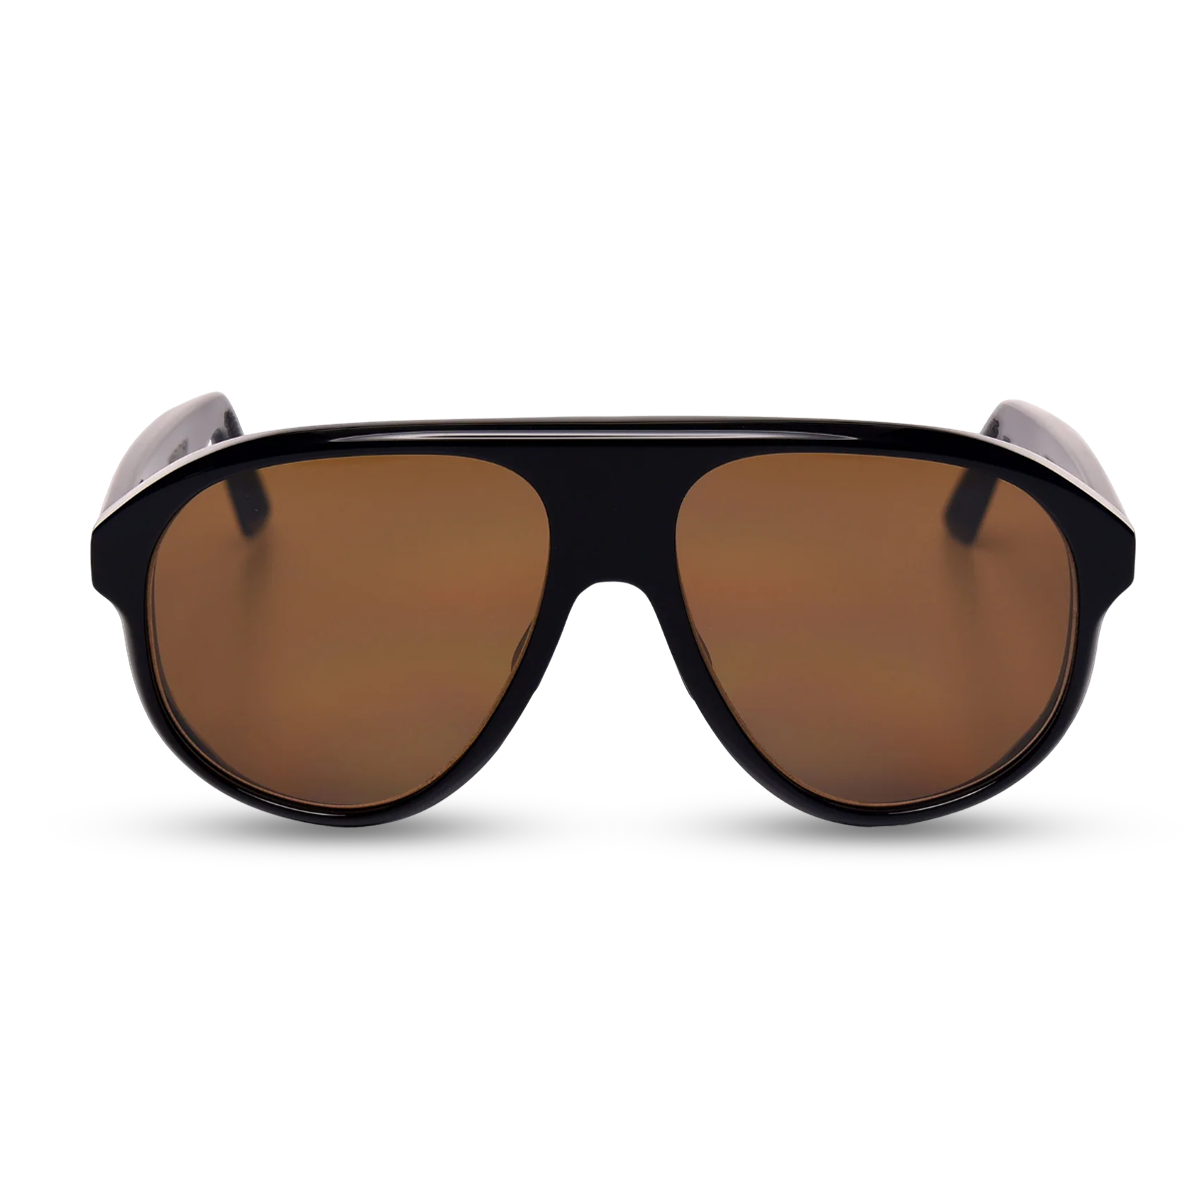 Stelvio Sunglasses - Noir